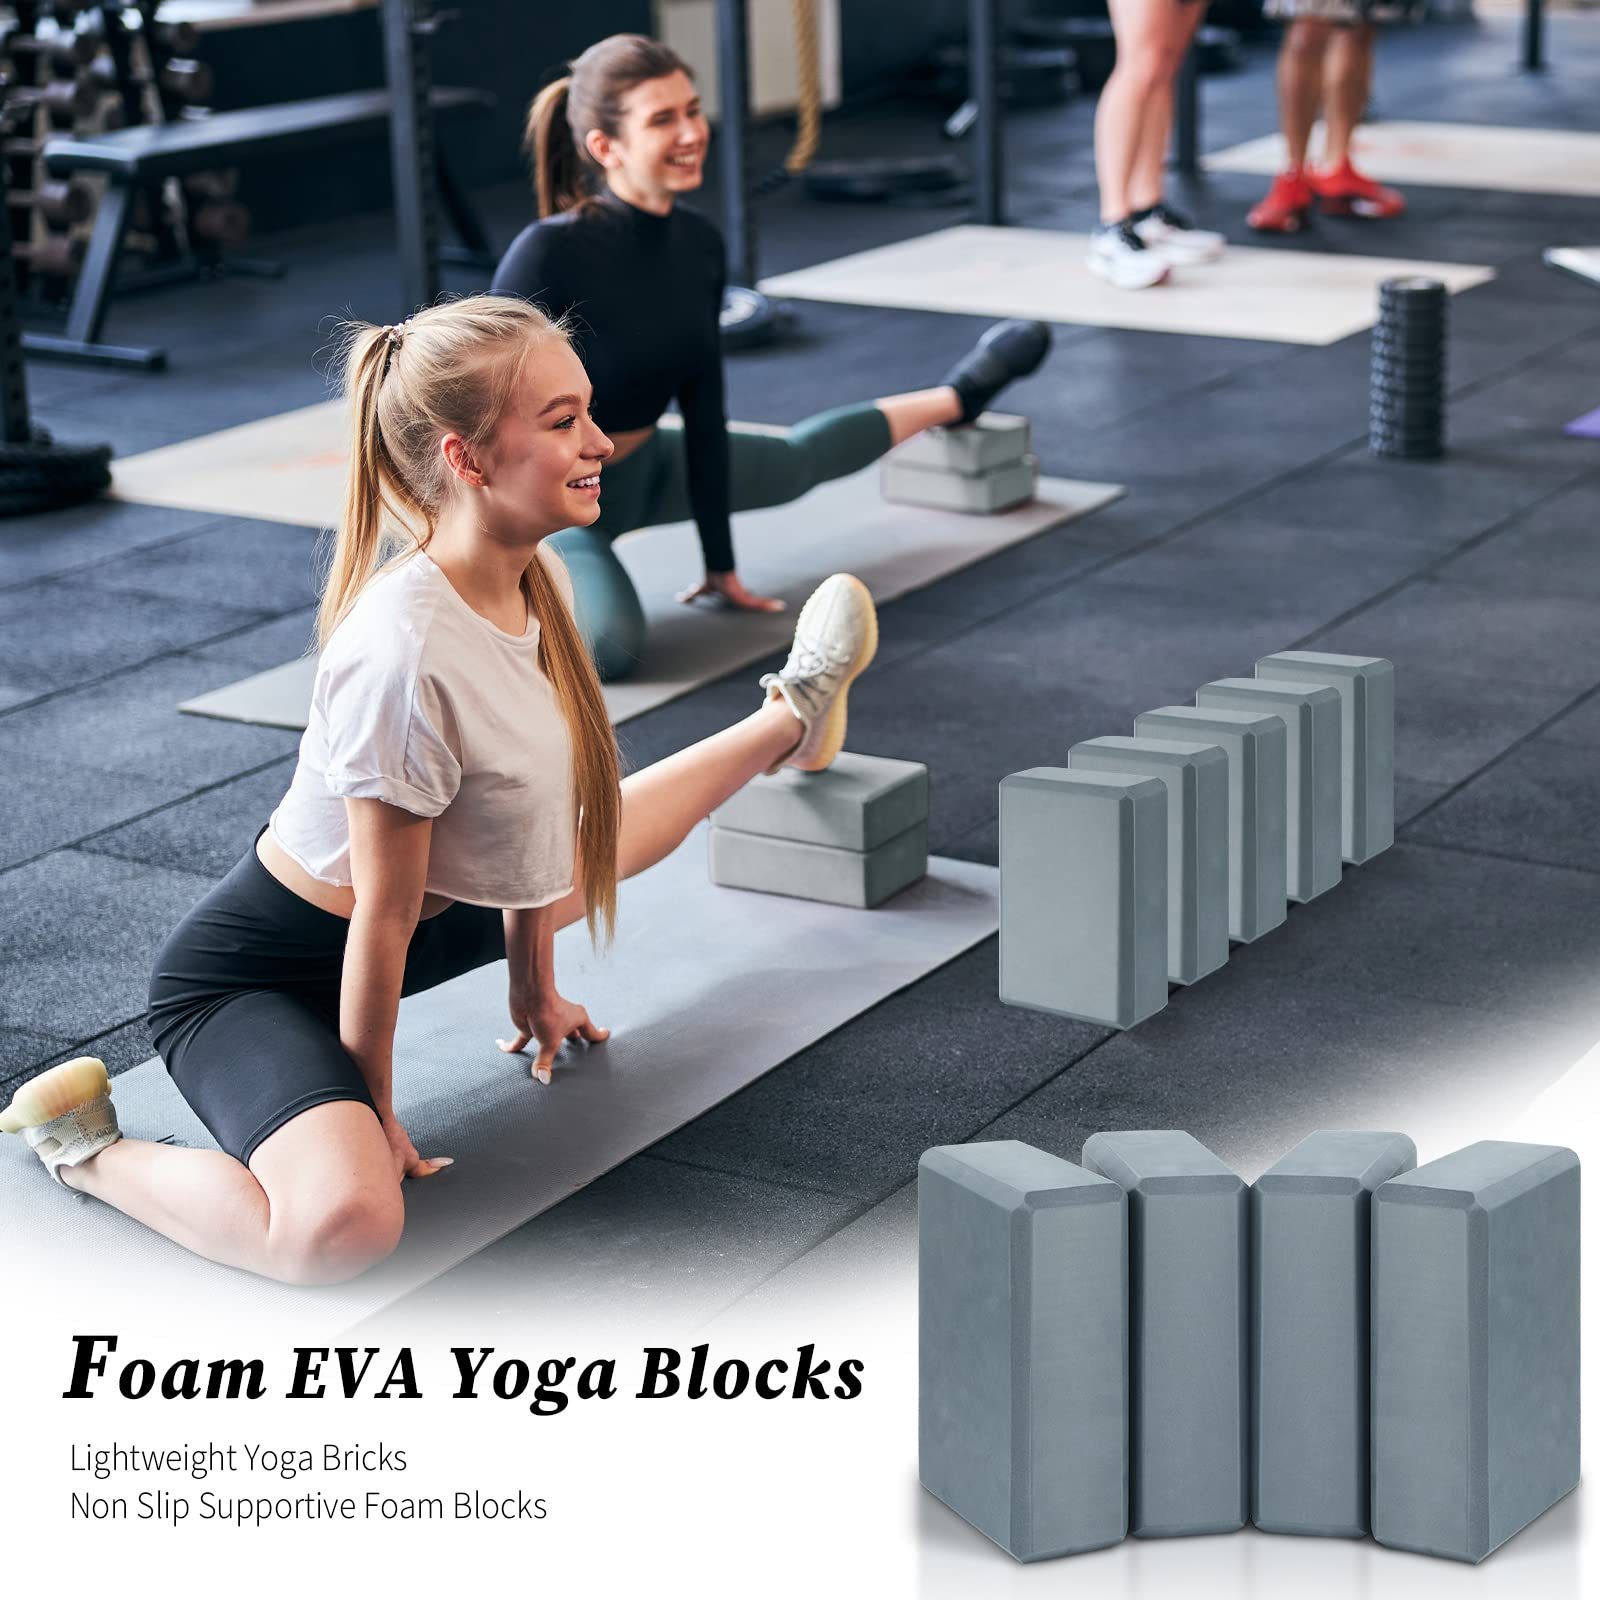 Yoga Block Blue Ultimate Support Firm High Density Foam Exercise Fitness  23cm